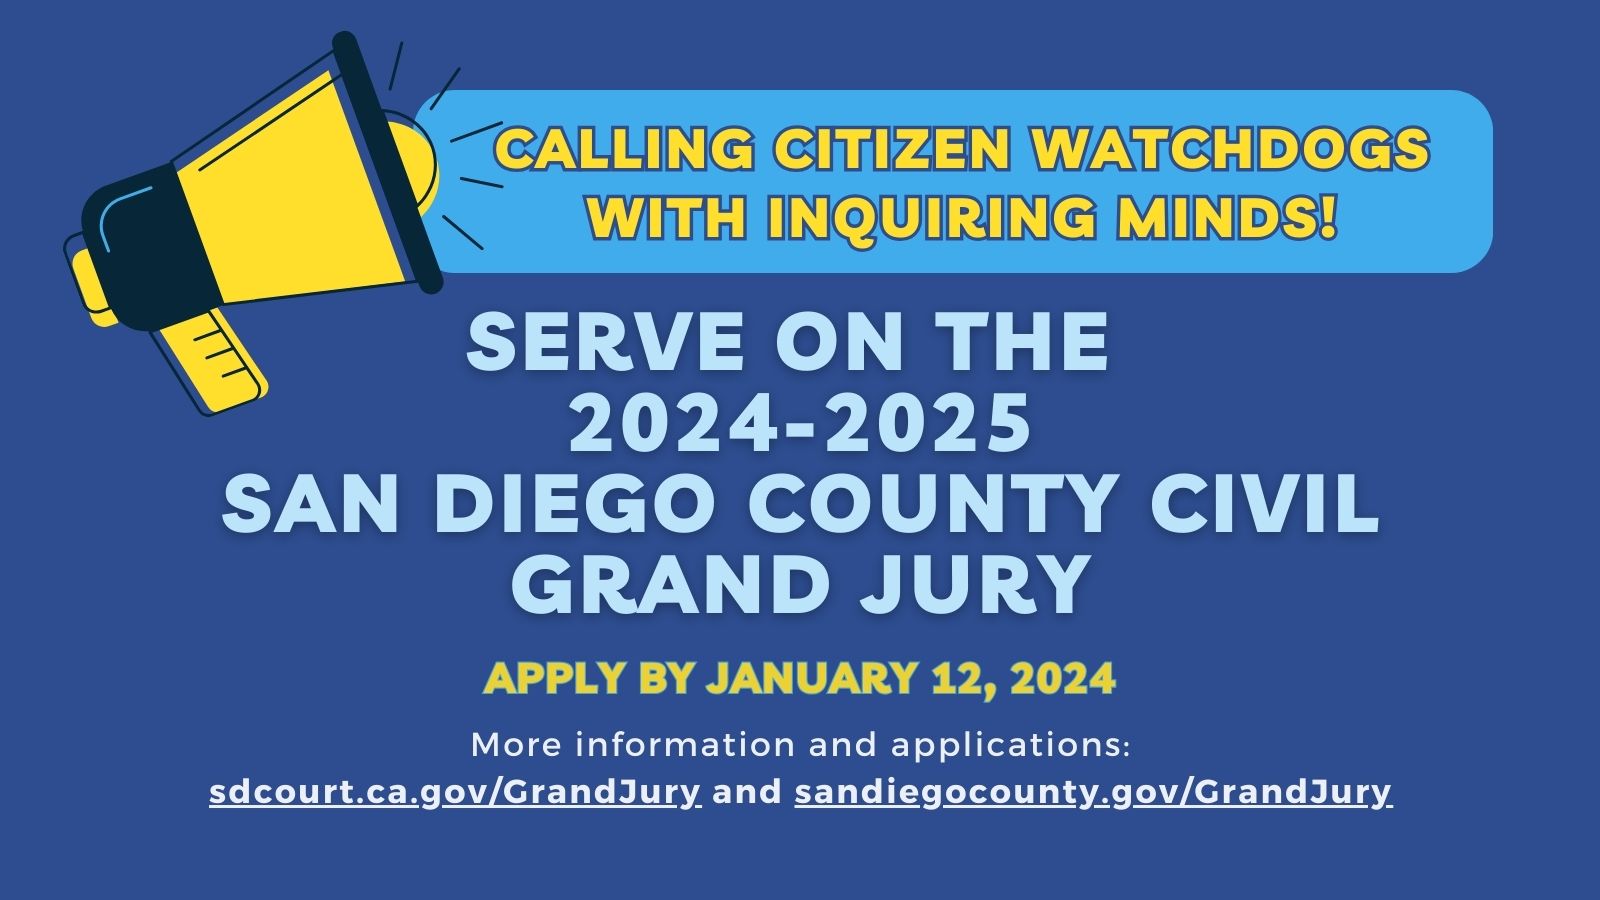 Grand Jury applications open through January 12, 2024